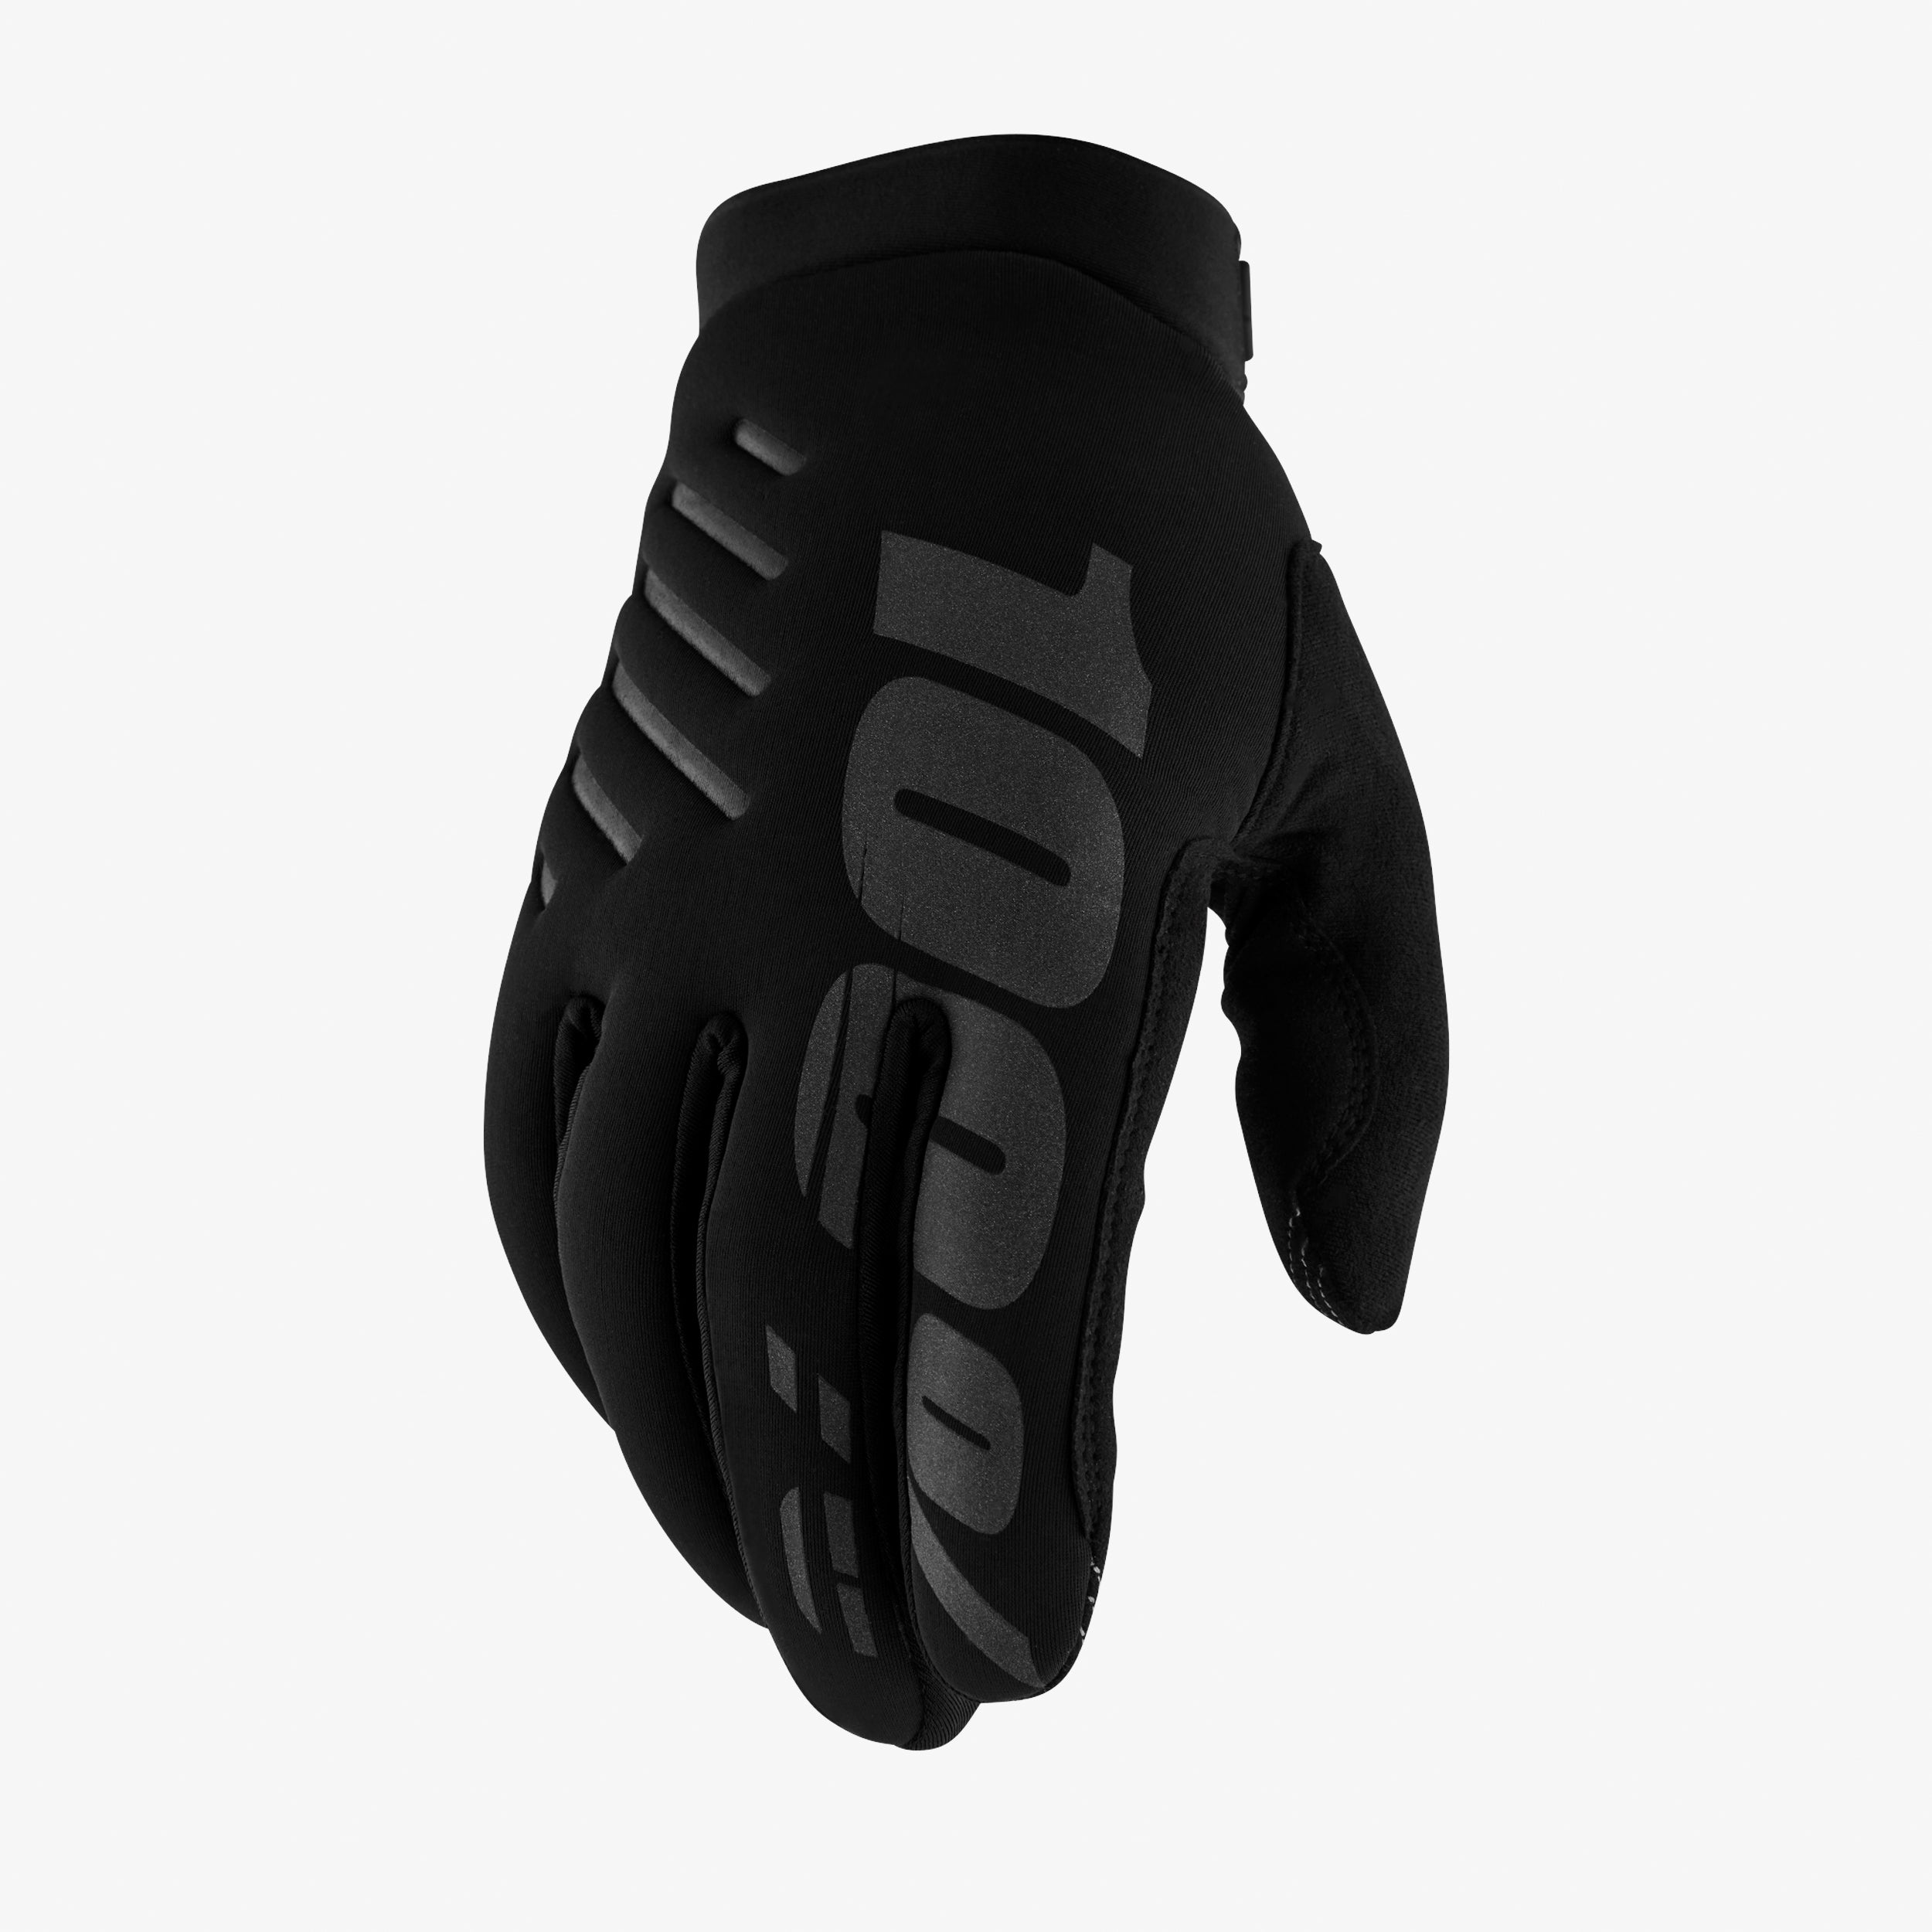 BRISKER Women's Glove - Black